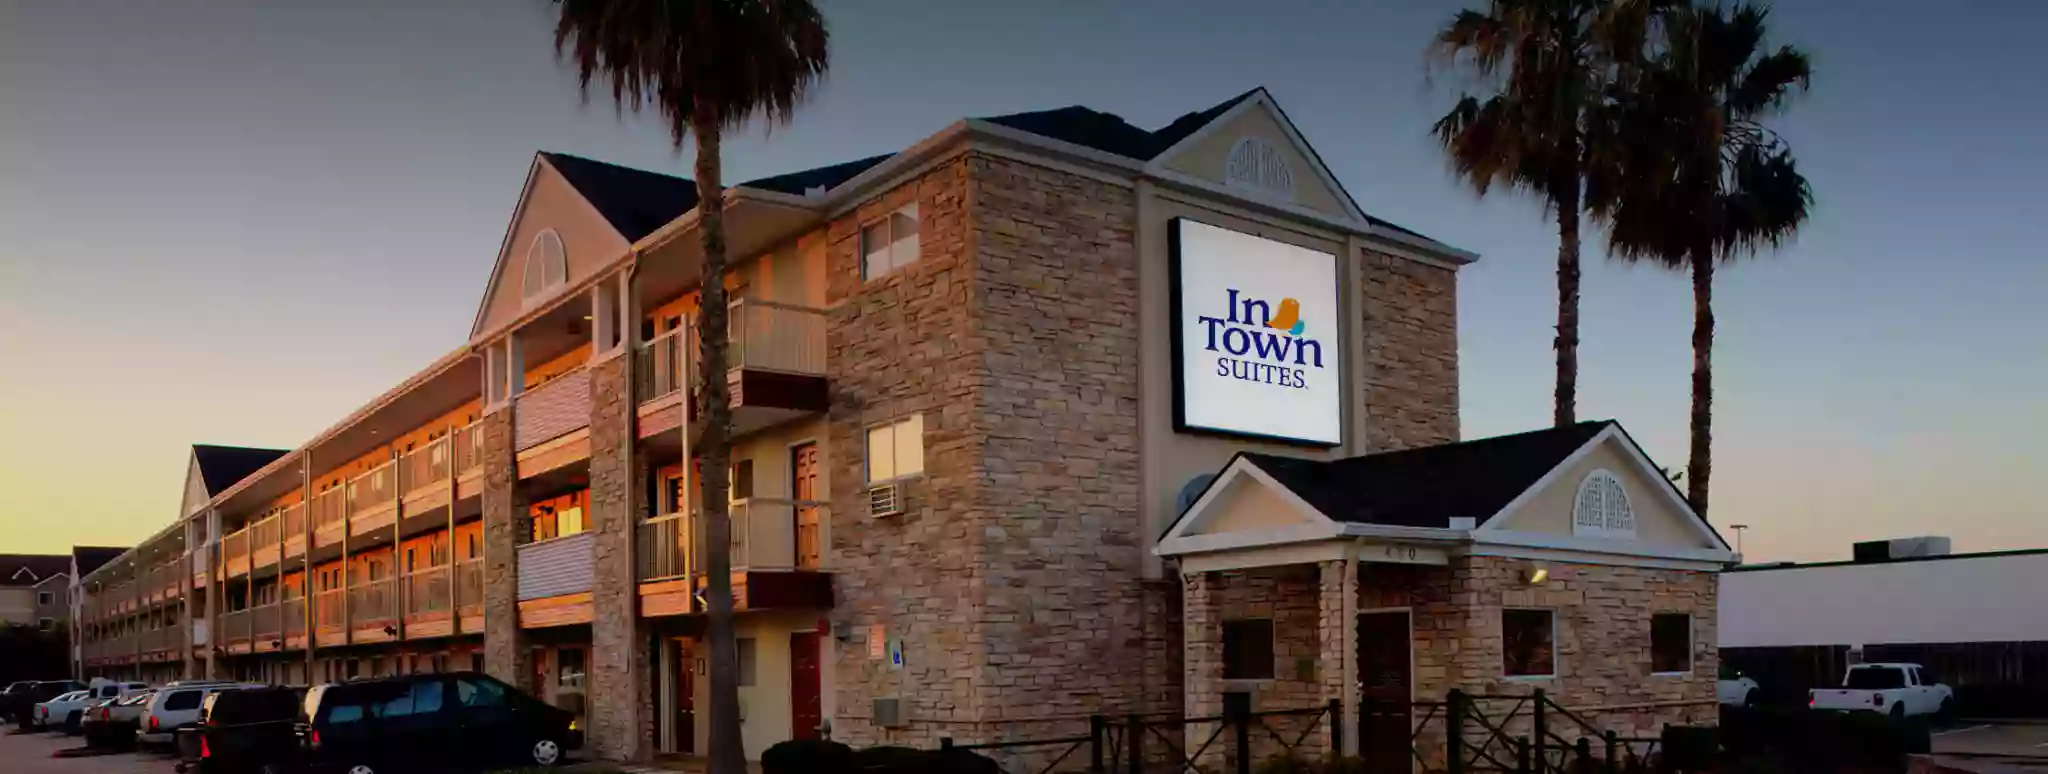 InTown Suites Extended Stay Memphis TN - Ridgeway Road